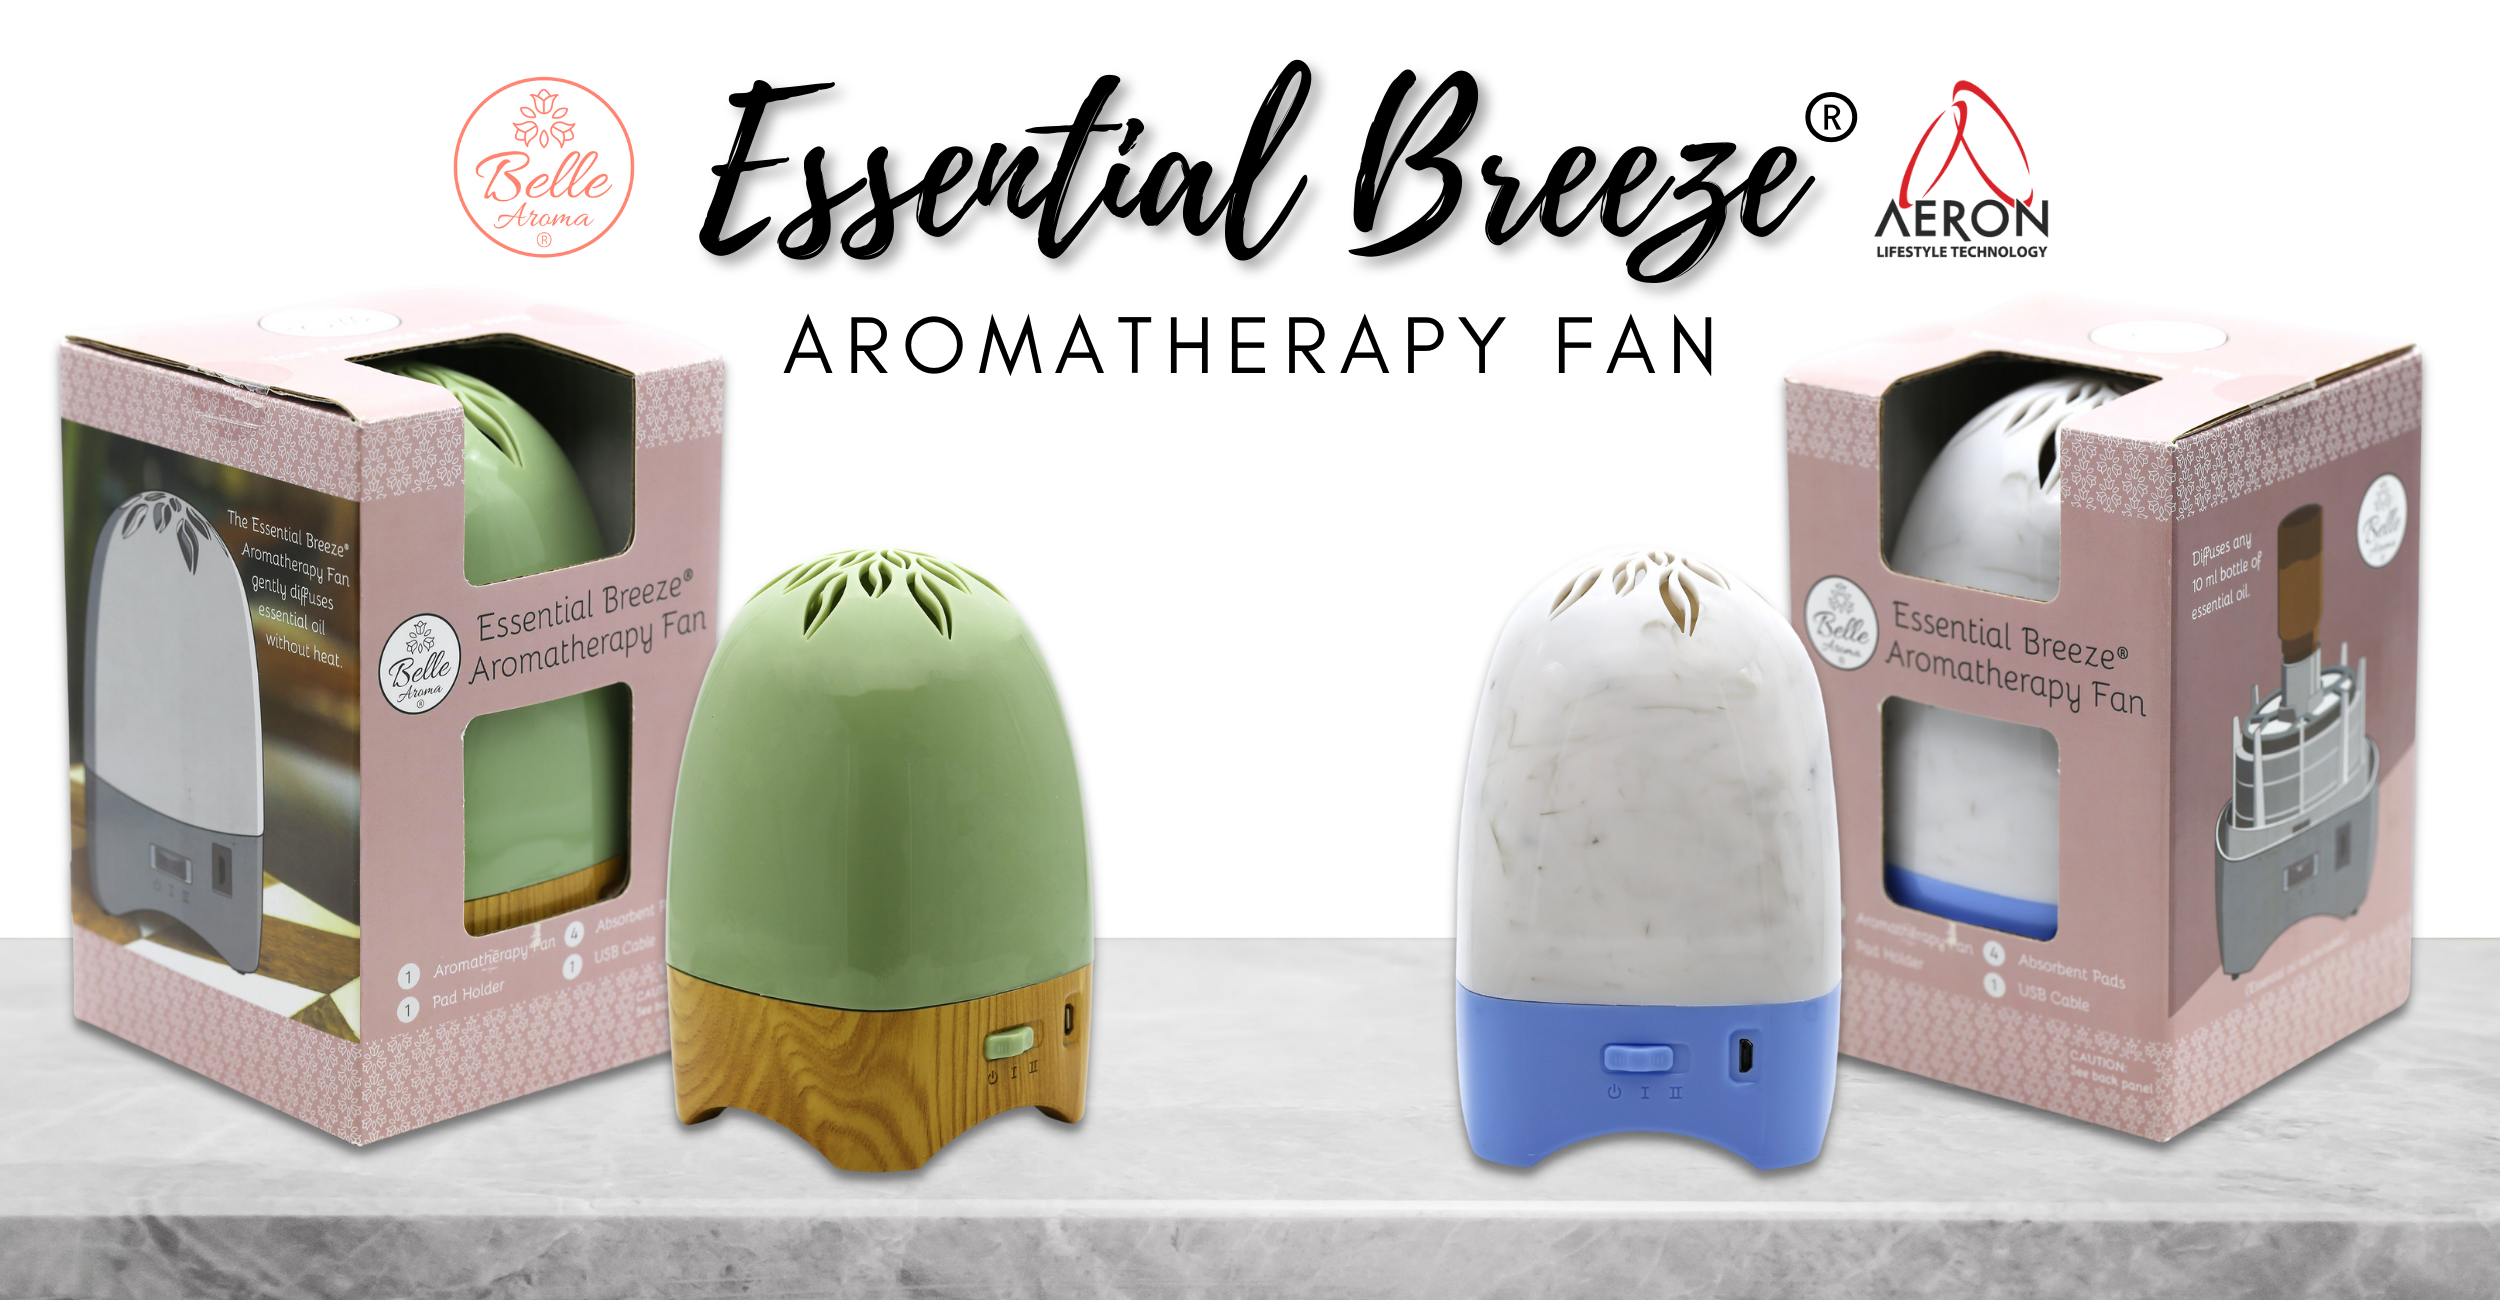 https://www.aeronlifetech.com/wp-content/uploads/2021/12/essential-breeze-aromatherapy-fan.png